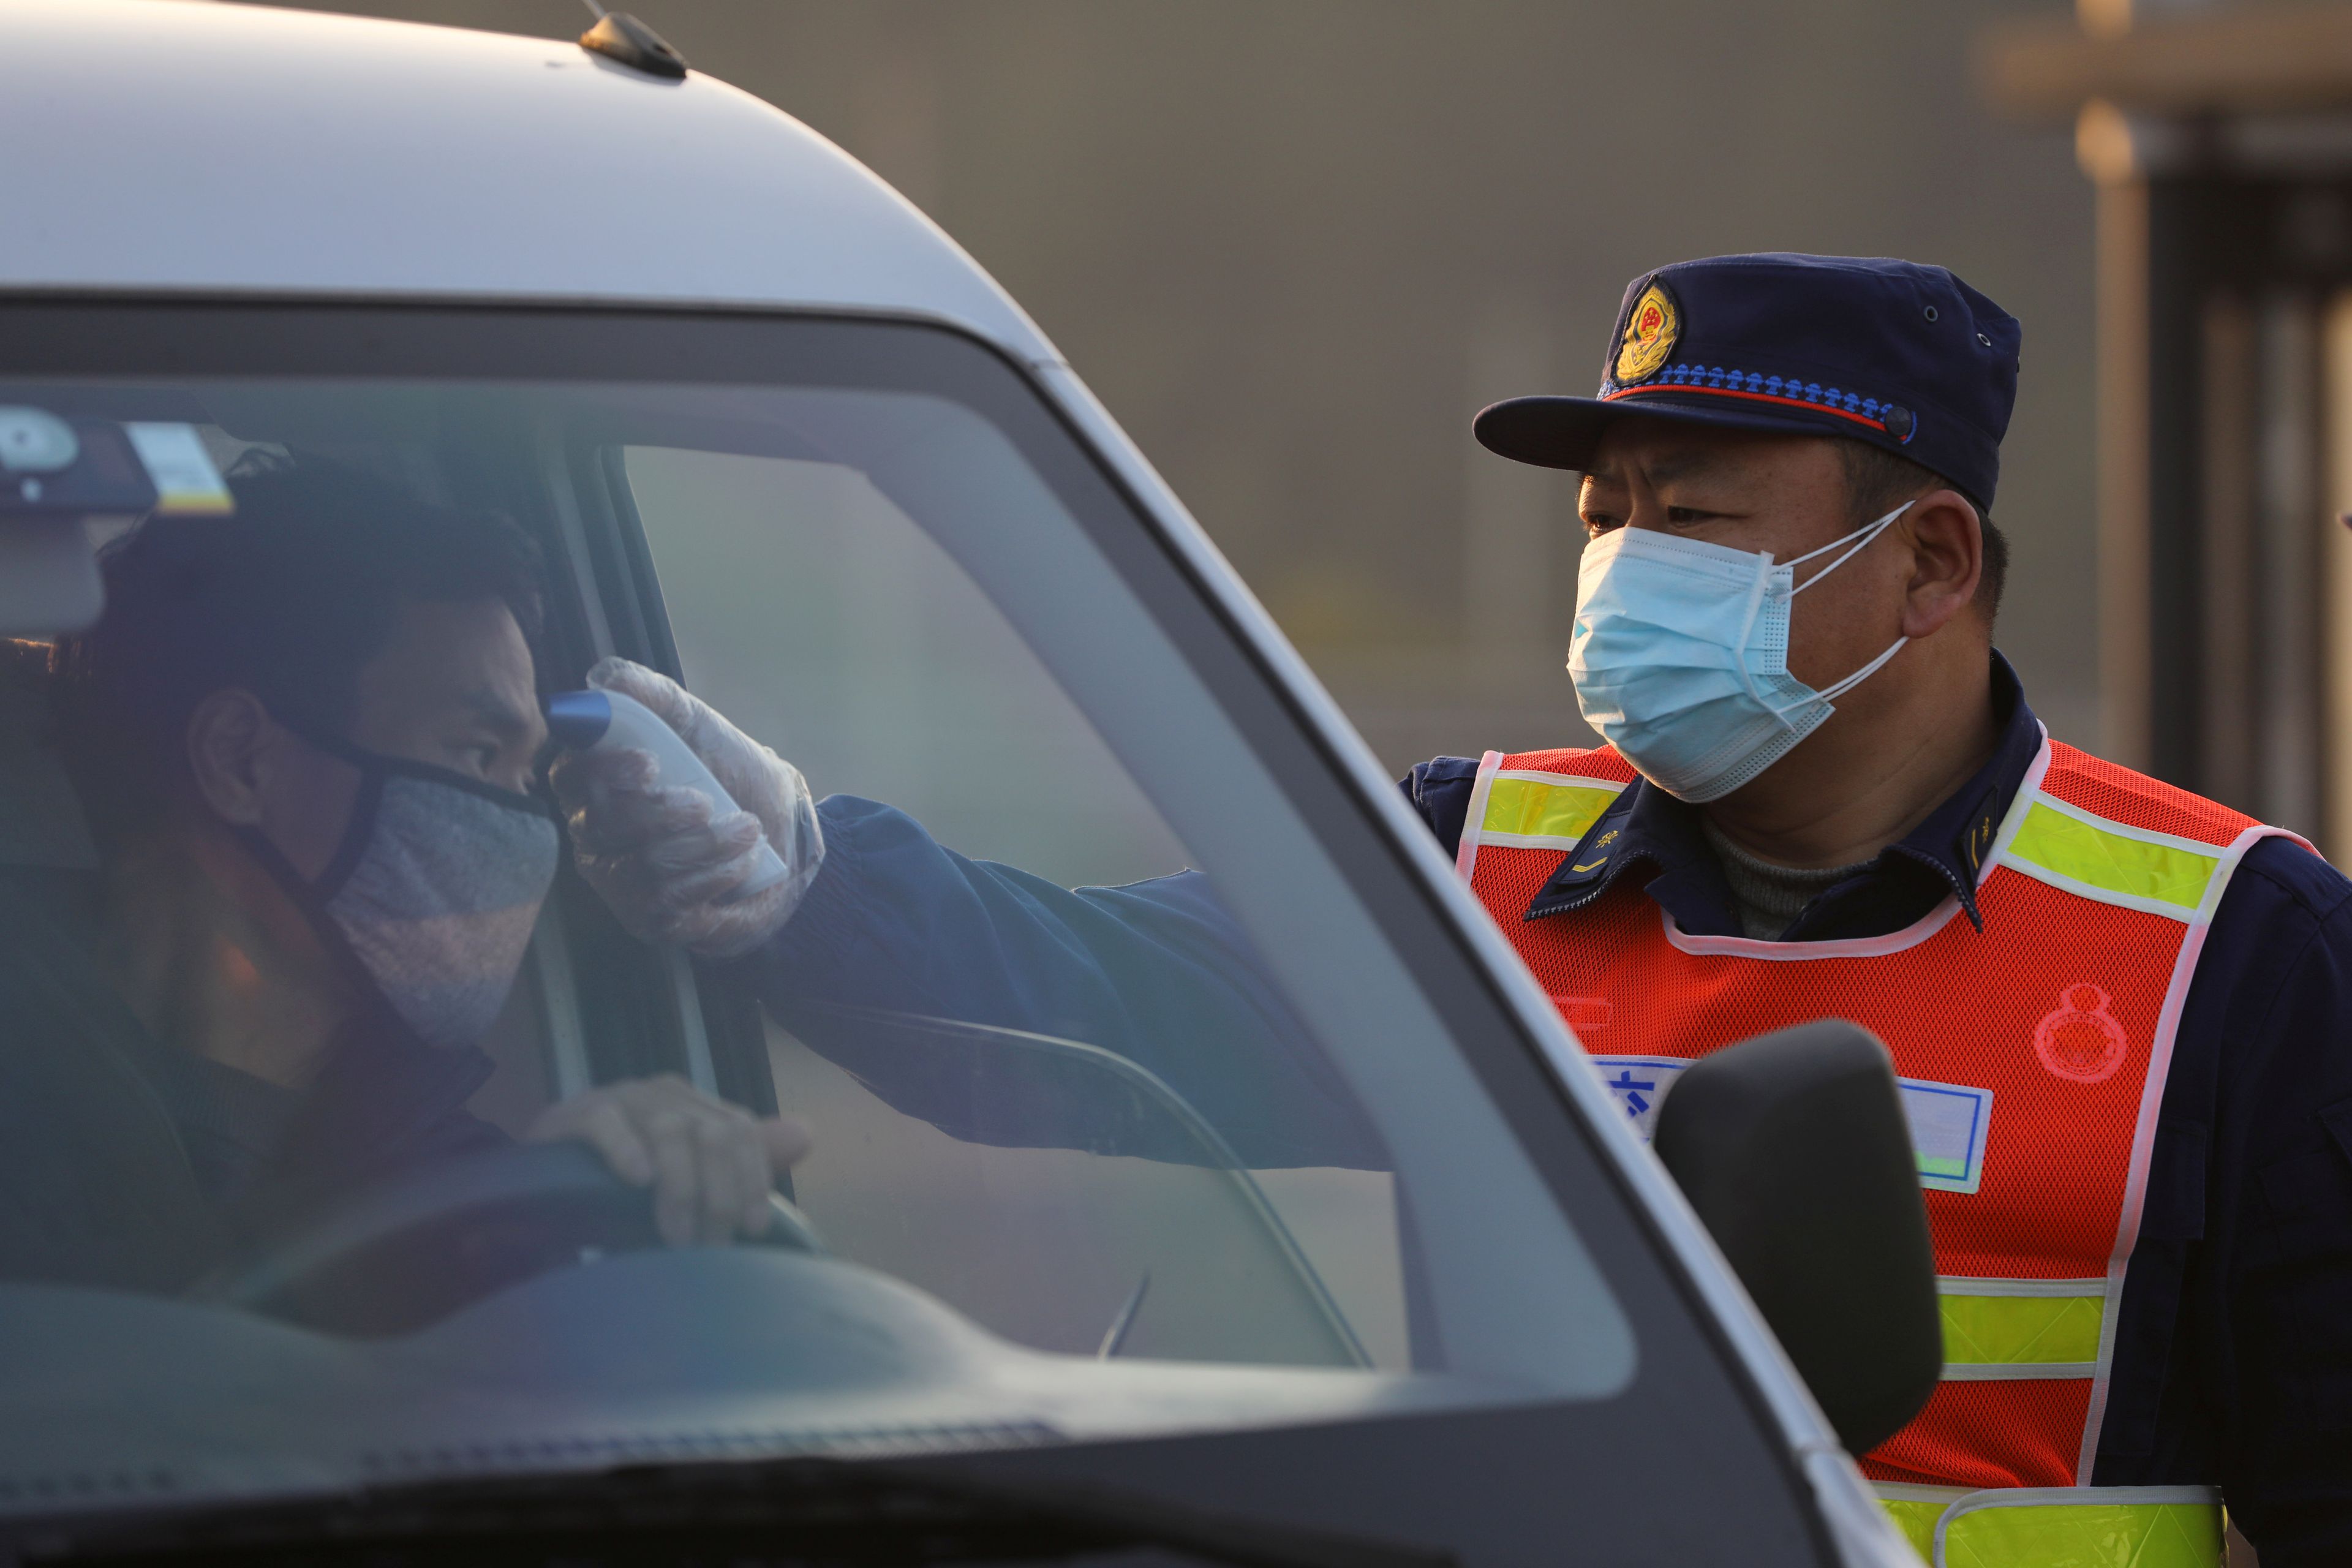 Toman la temperatura a un conductor en China.